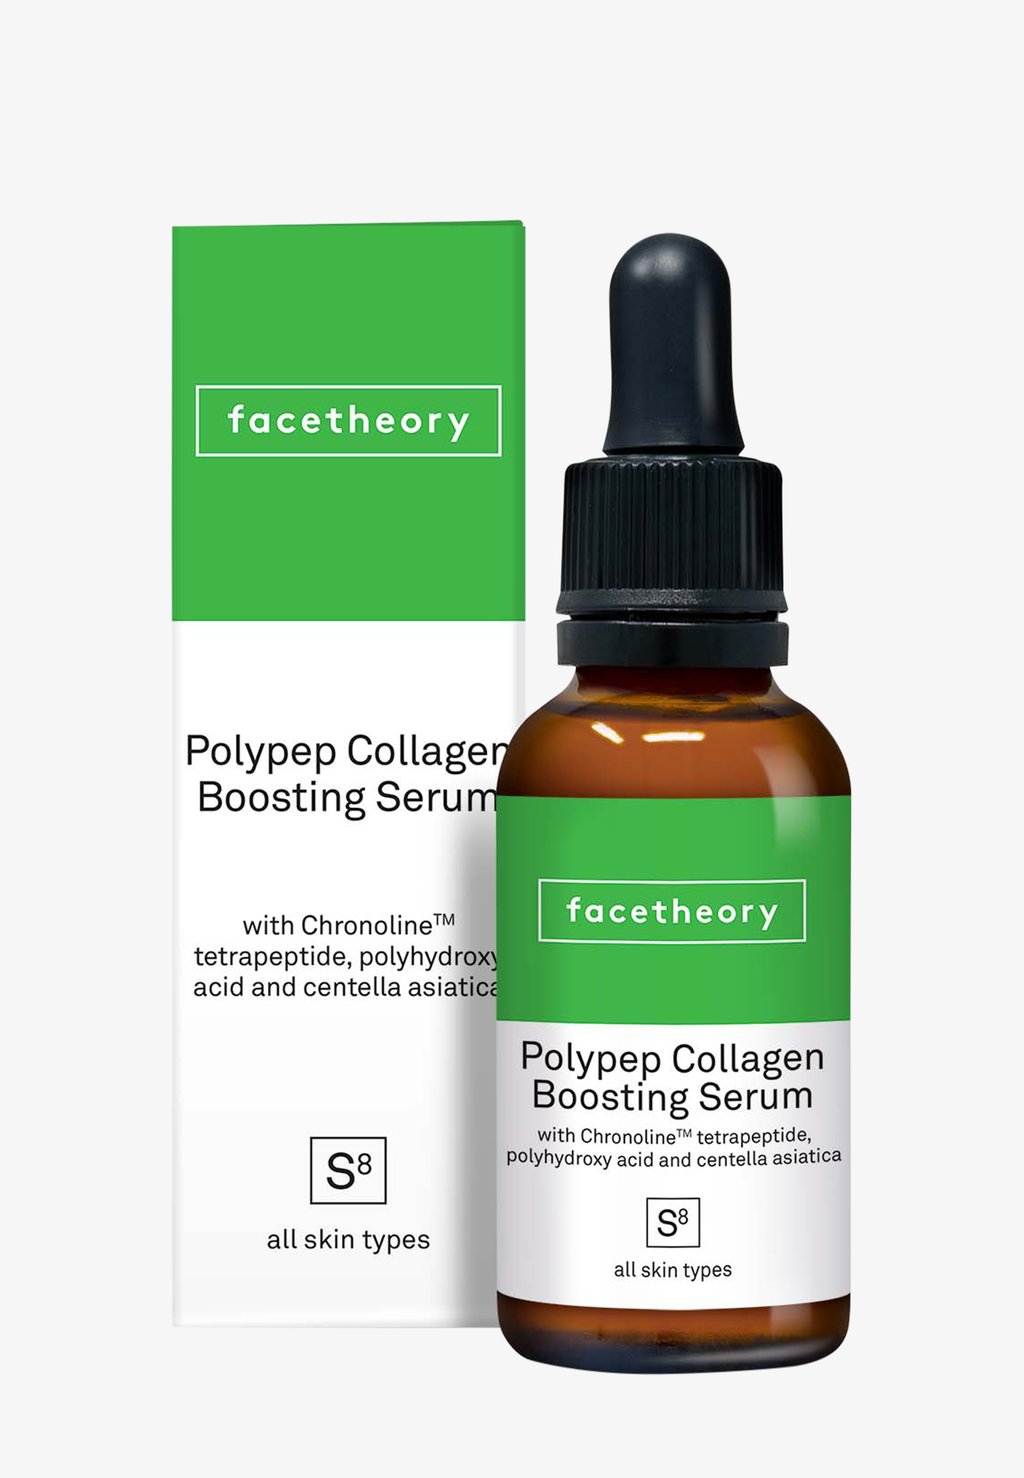 Сыворотка Polypep Collagen Boosting Serum facetheory